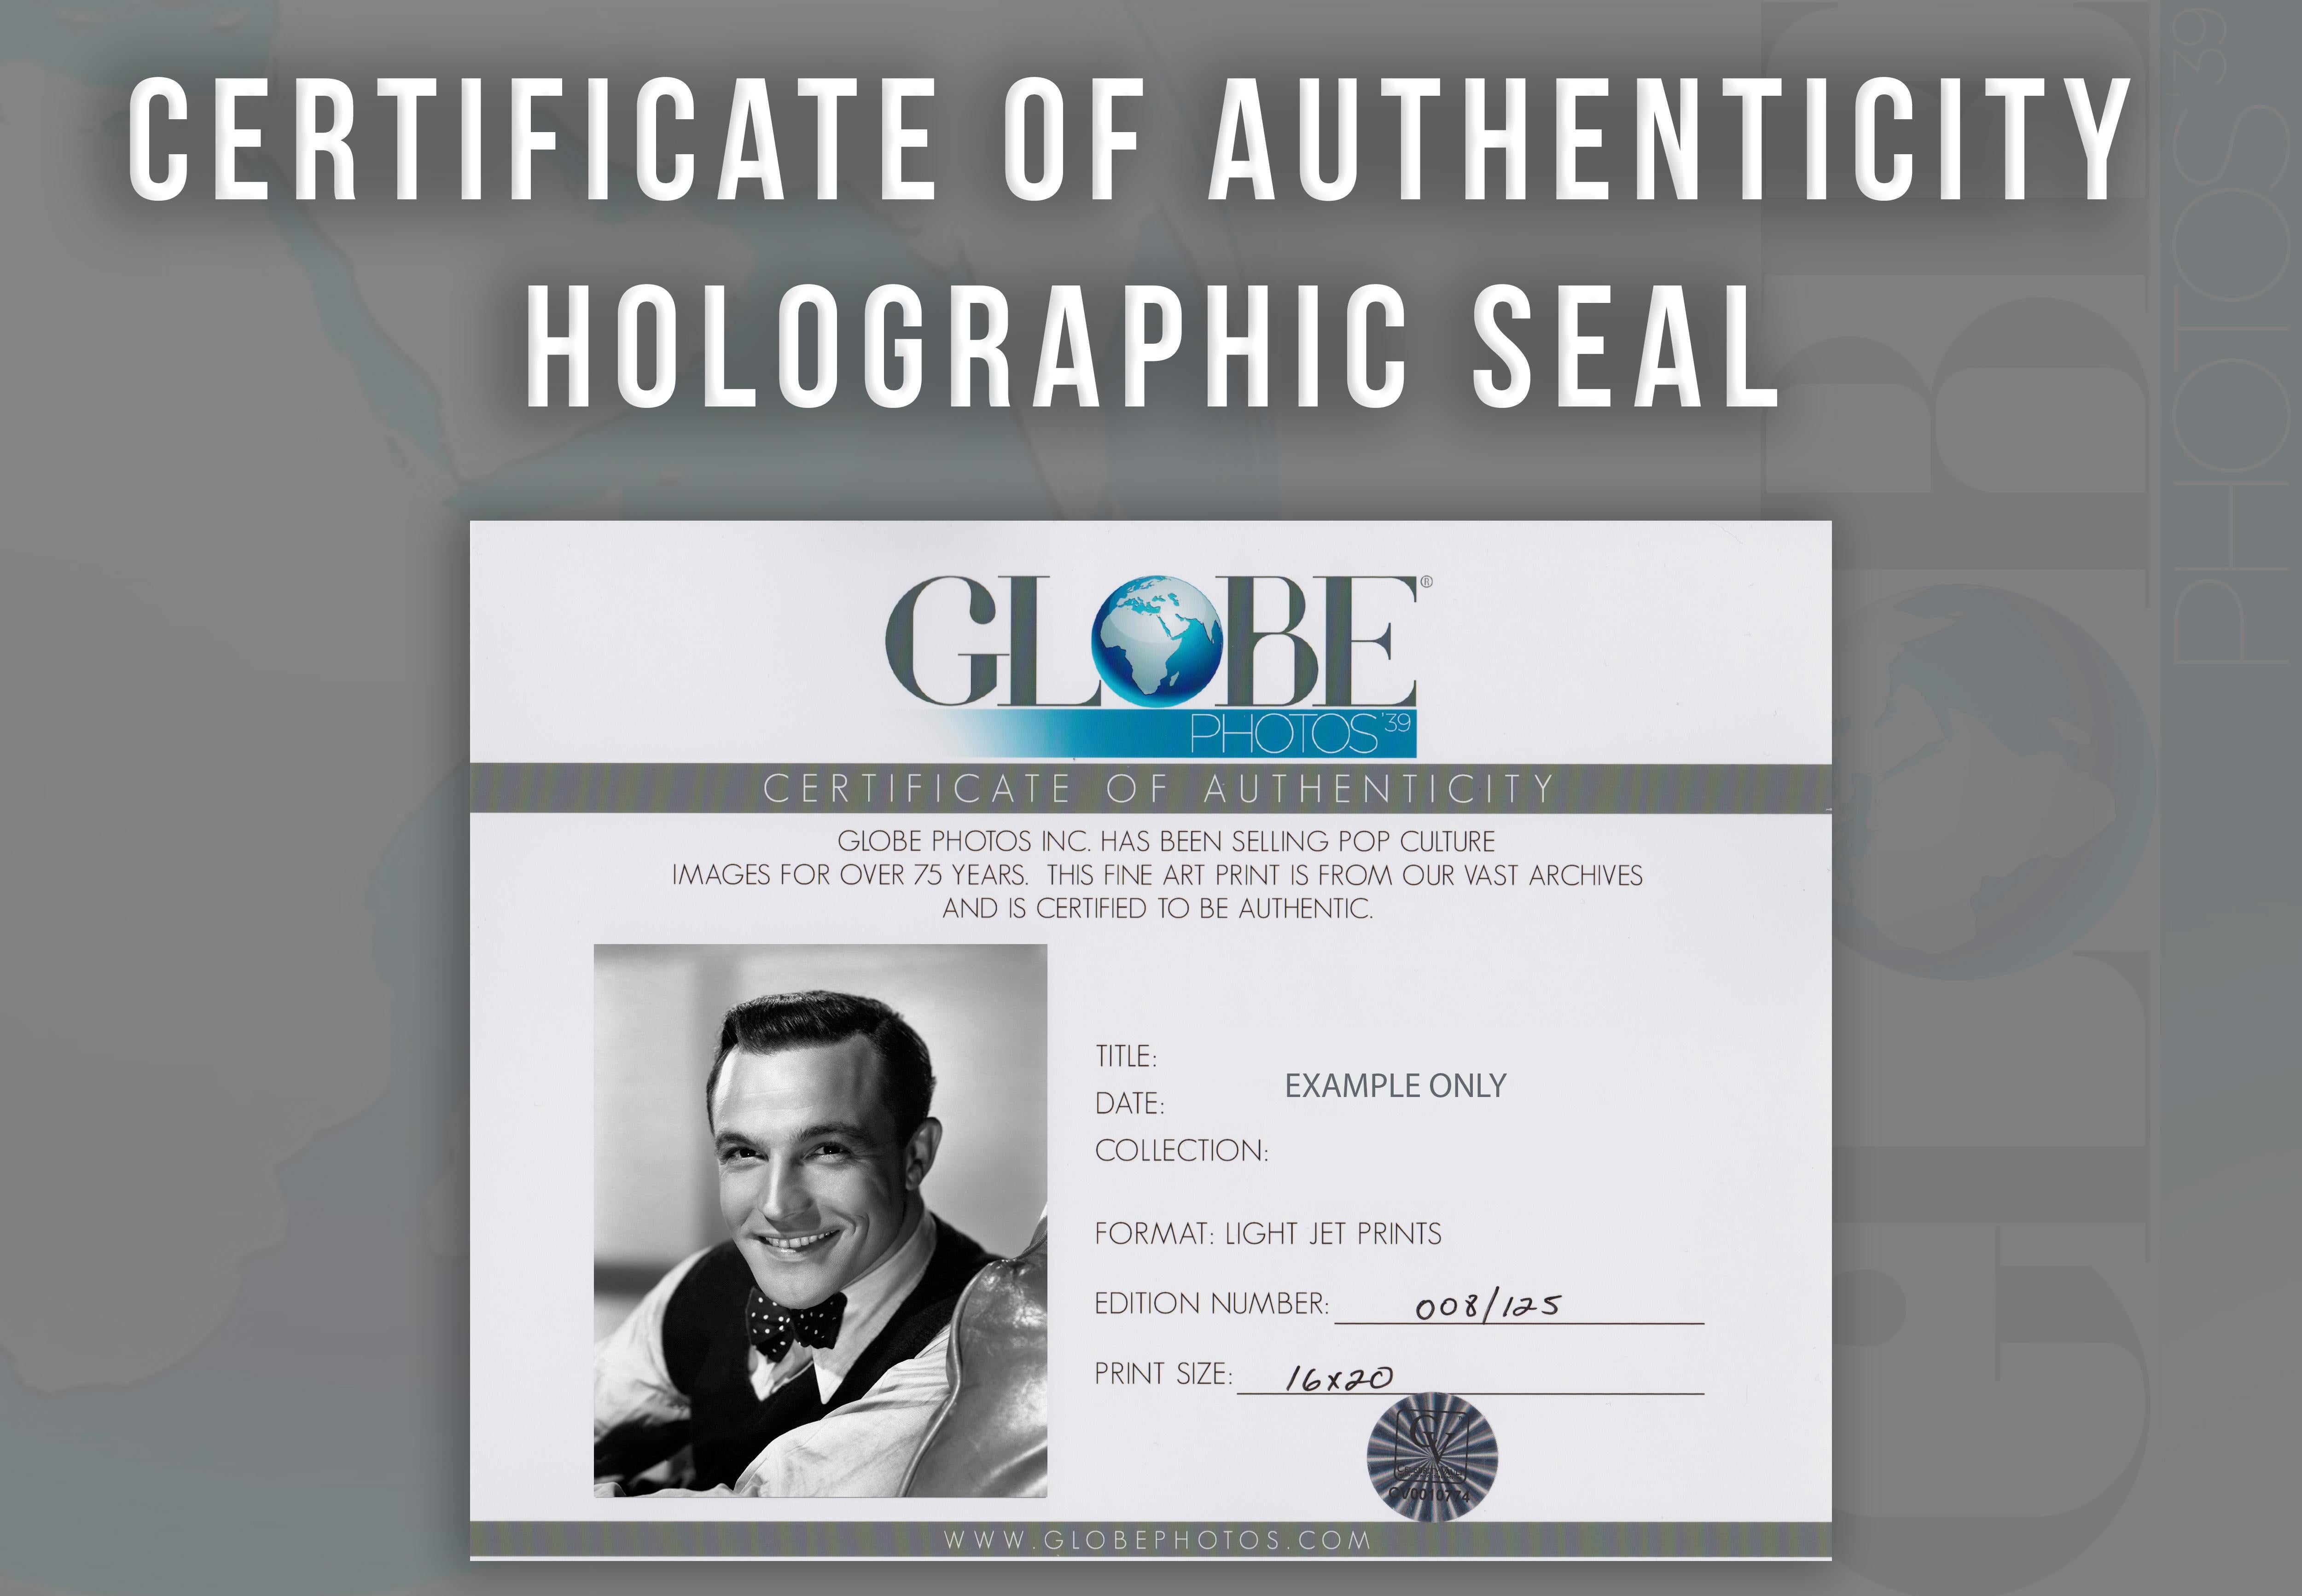 Gene Kelly: Big Smile in the Studio Globe Photos Fine Art Print - Gray Portrait Photograph by Unknown